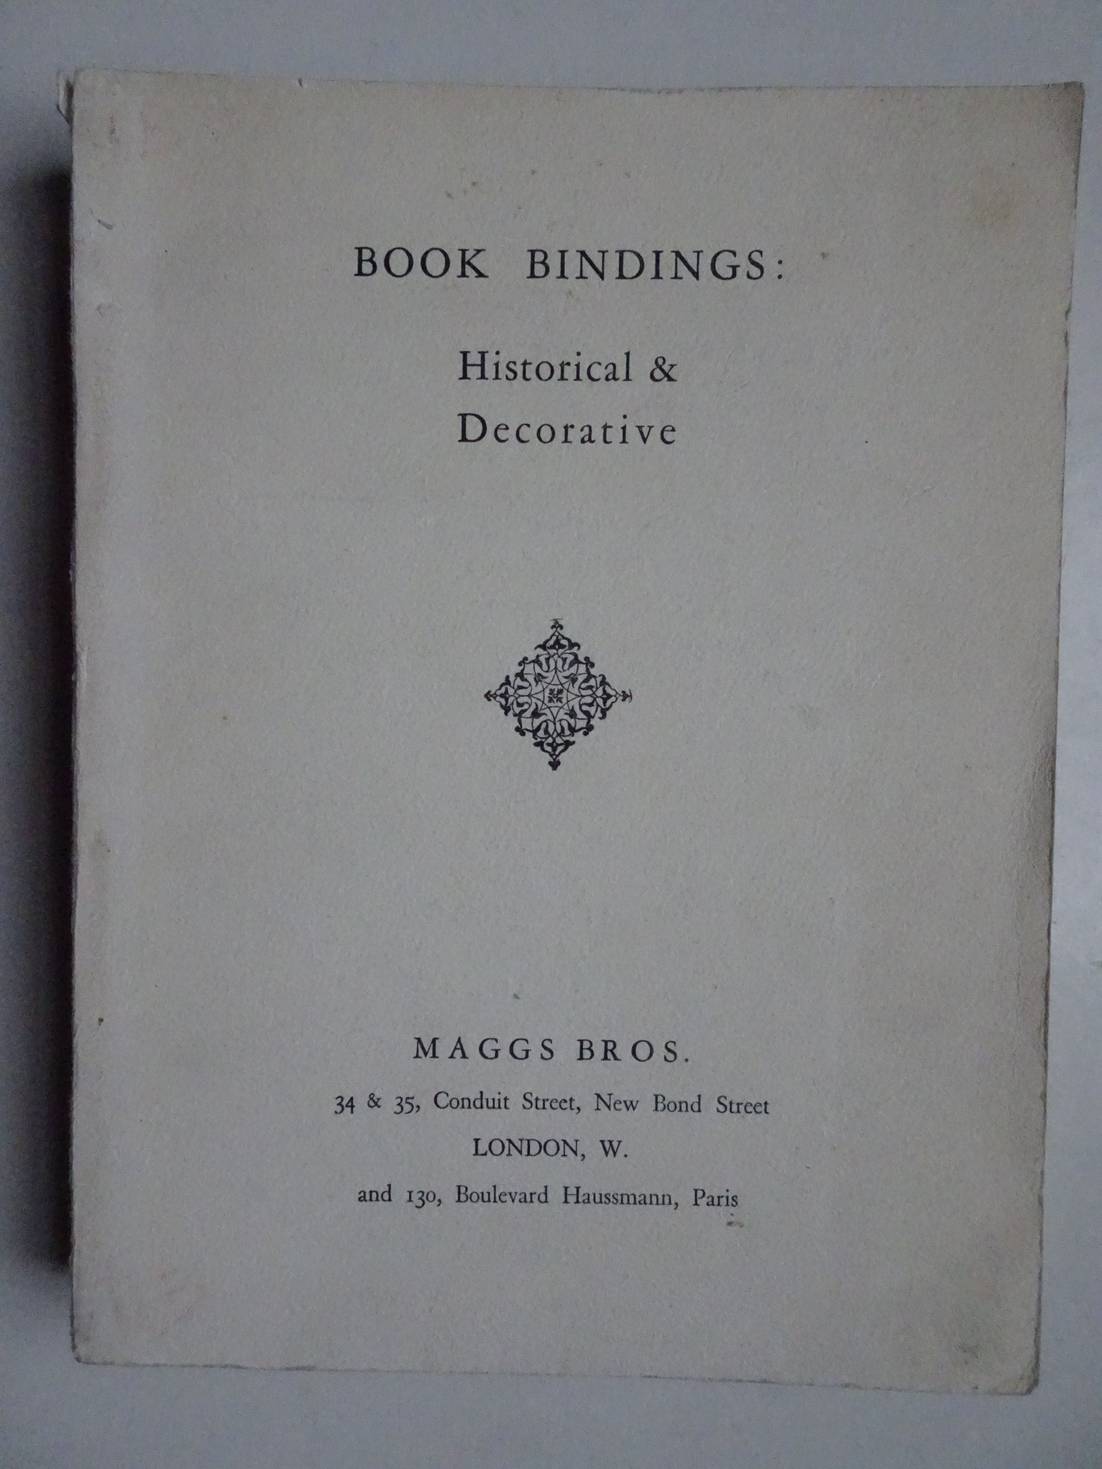 -. - Book bindings: Historical & Decorative.